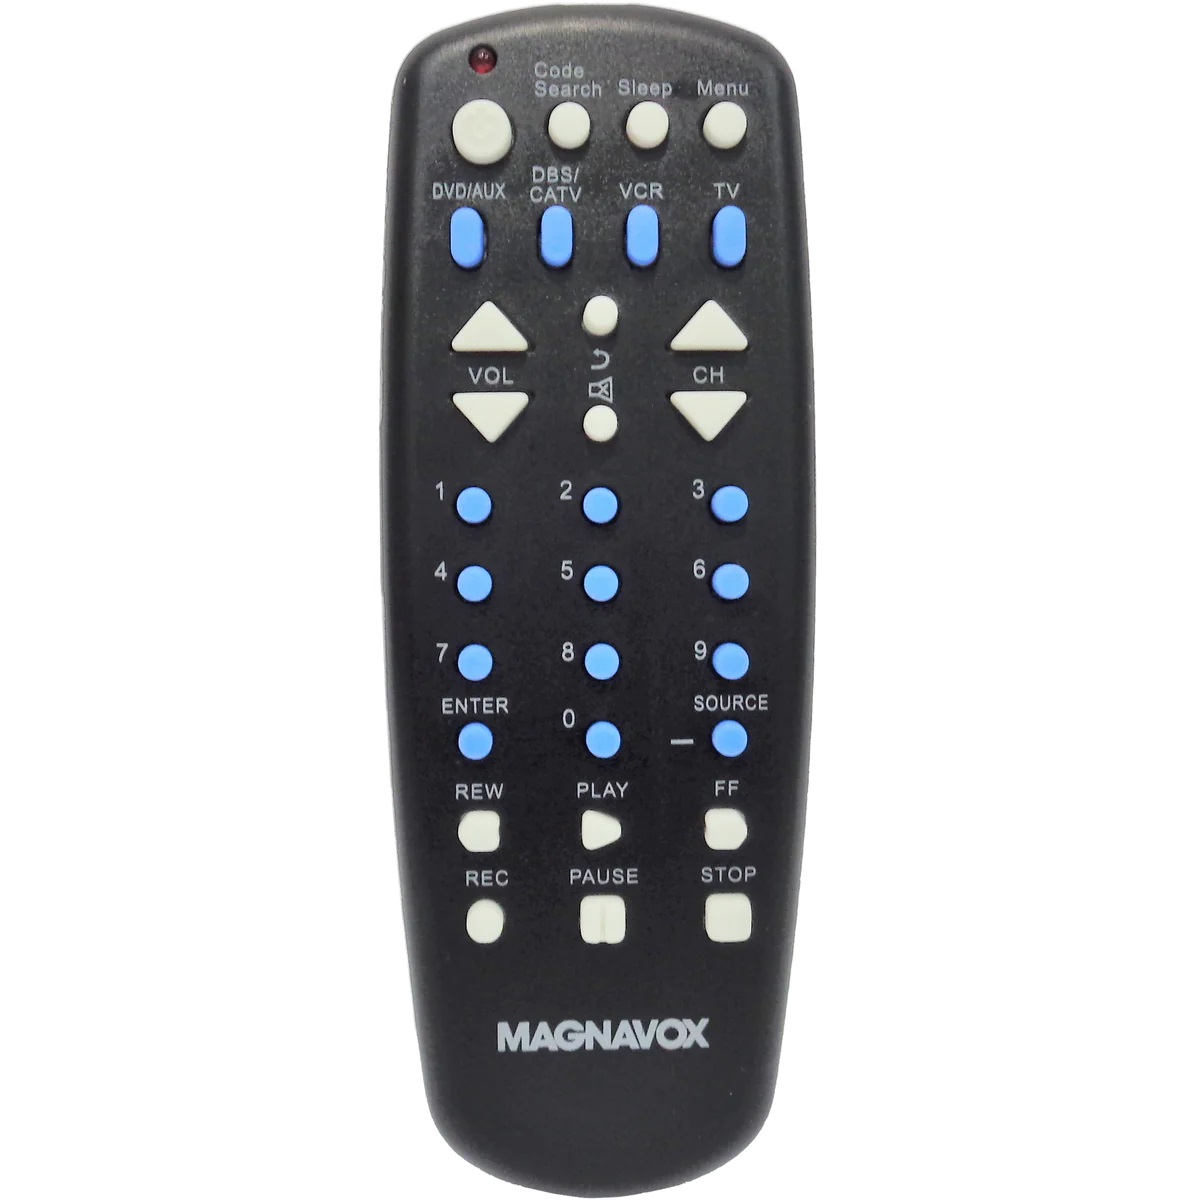 How Do I Program My Magnavox Universal Remote To My TV